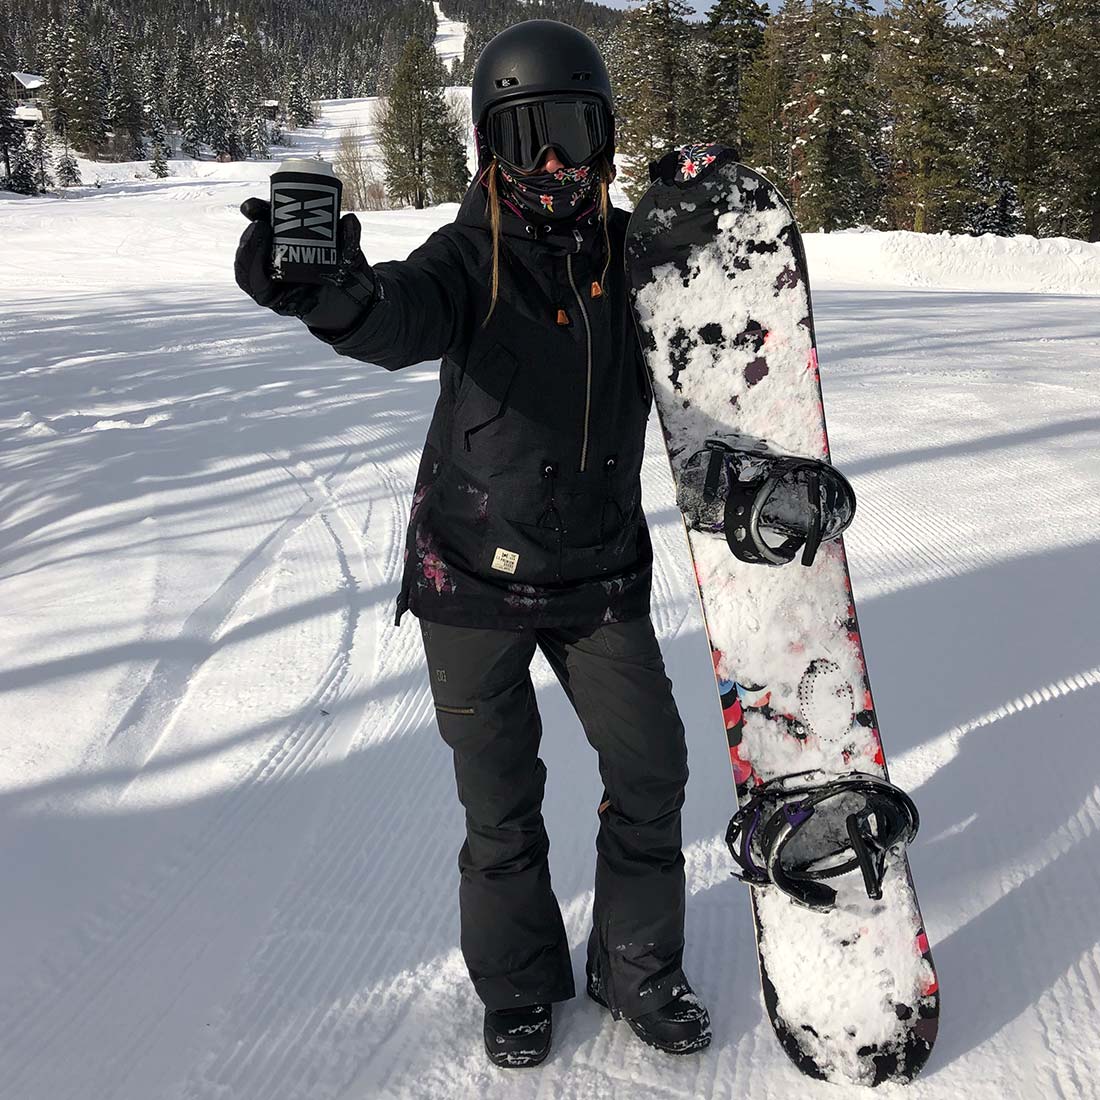 Andrea snowboarding